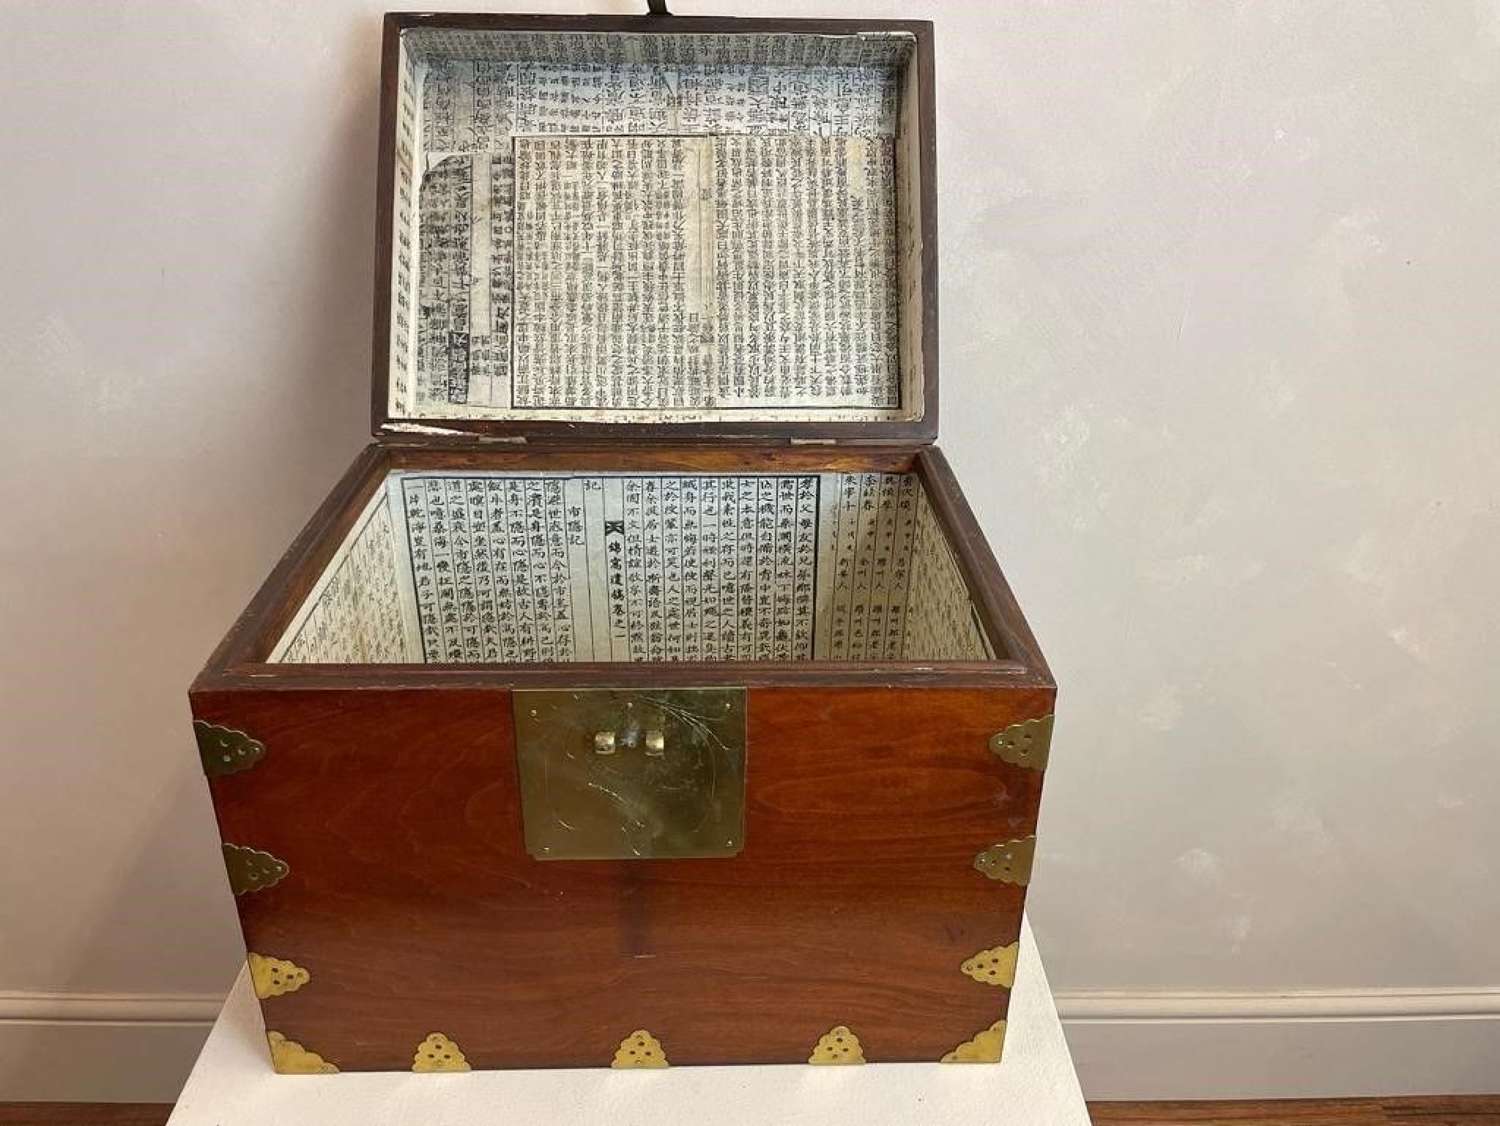 Oriental hardwood box with decorative brass band